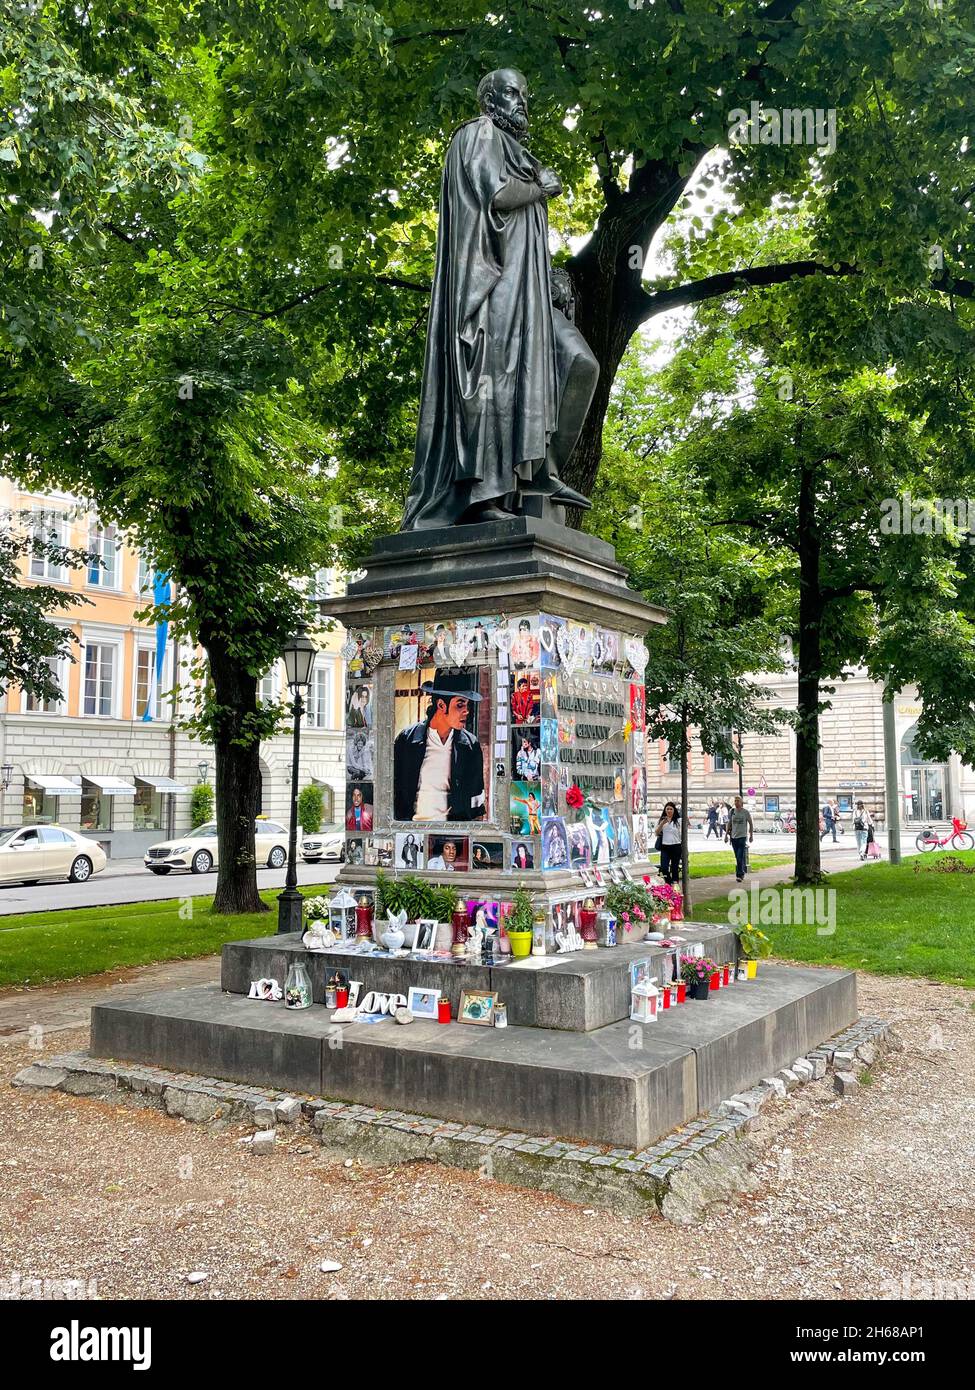 Munich, Germany - July 8, 2021: Souvenirs of Michael Jackson placed around a statue at Promenadenplatz. Stock Photo